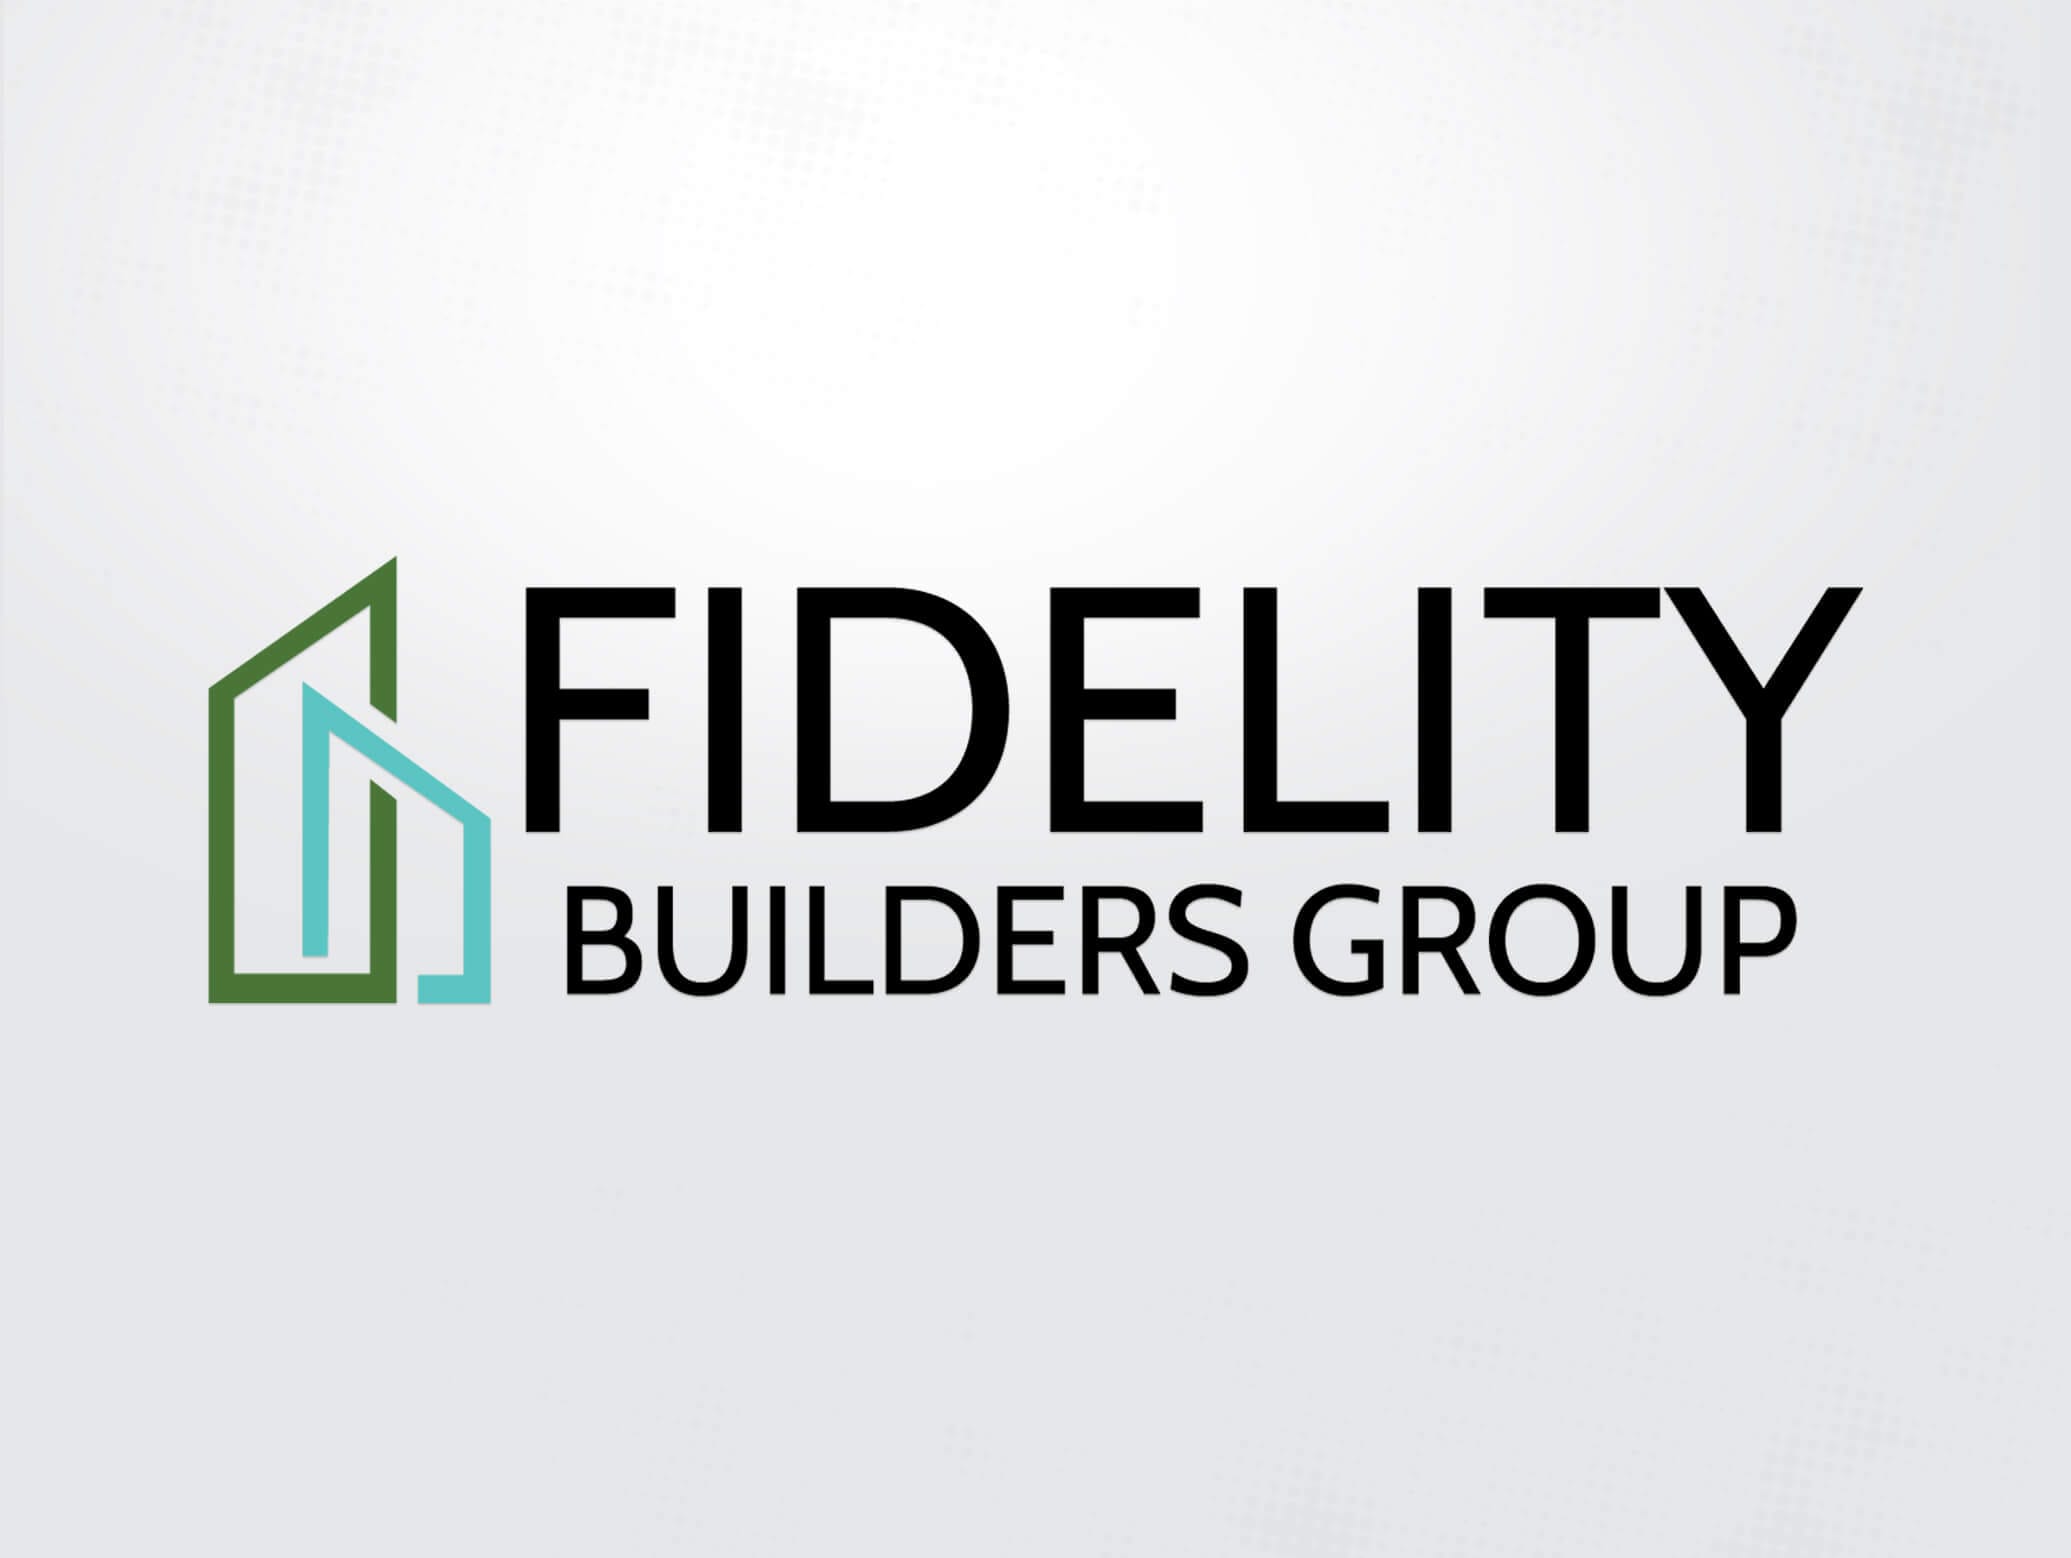 fidelity builders group logo